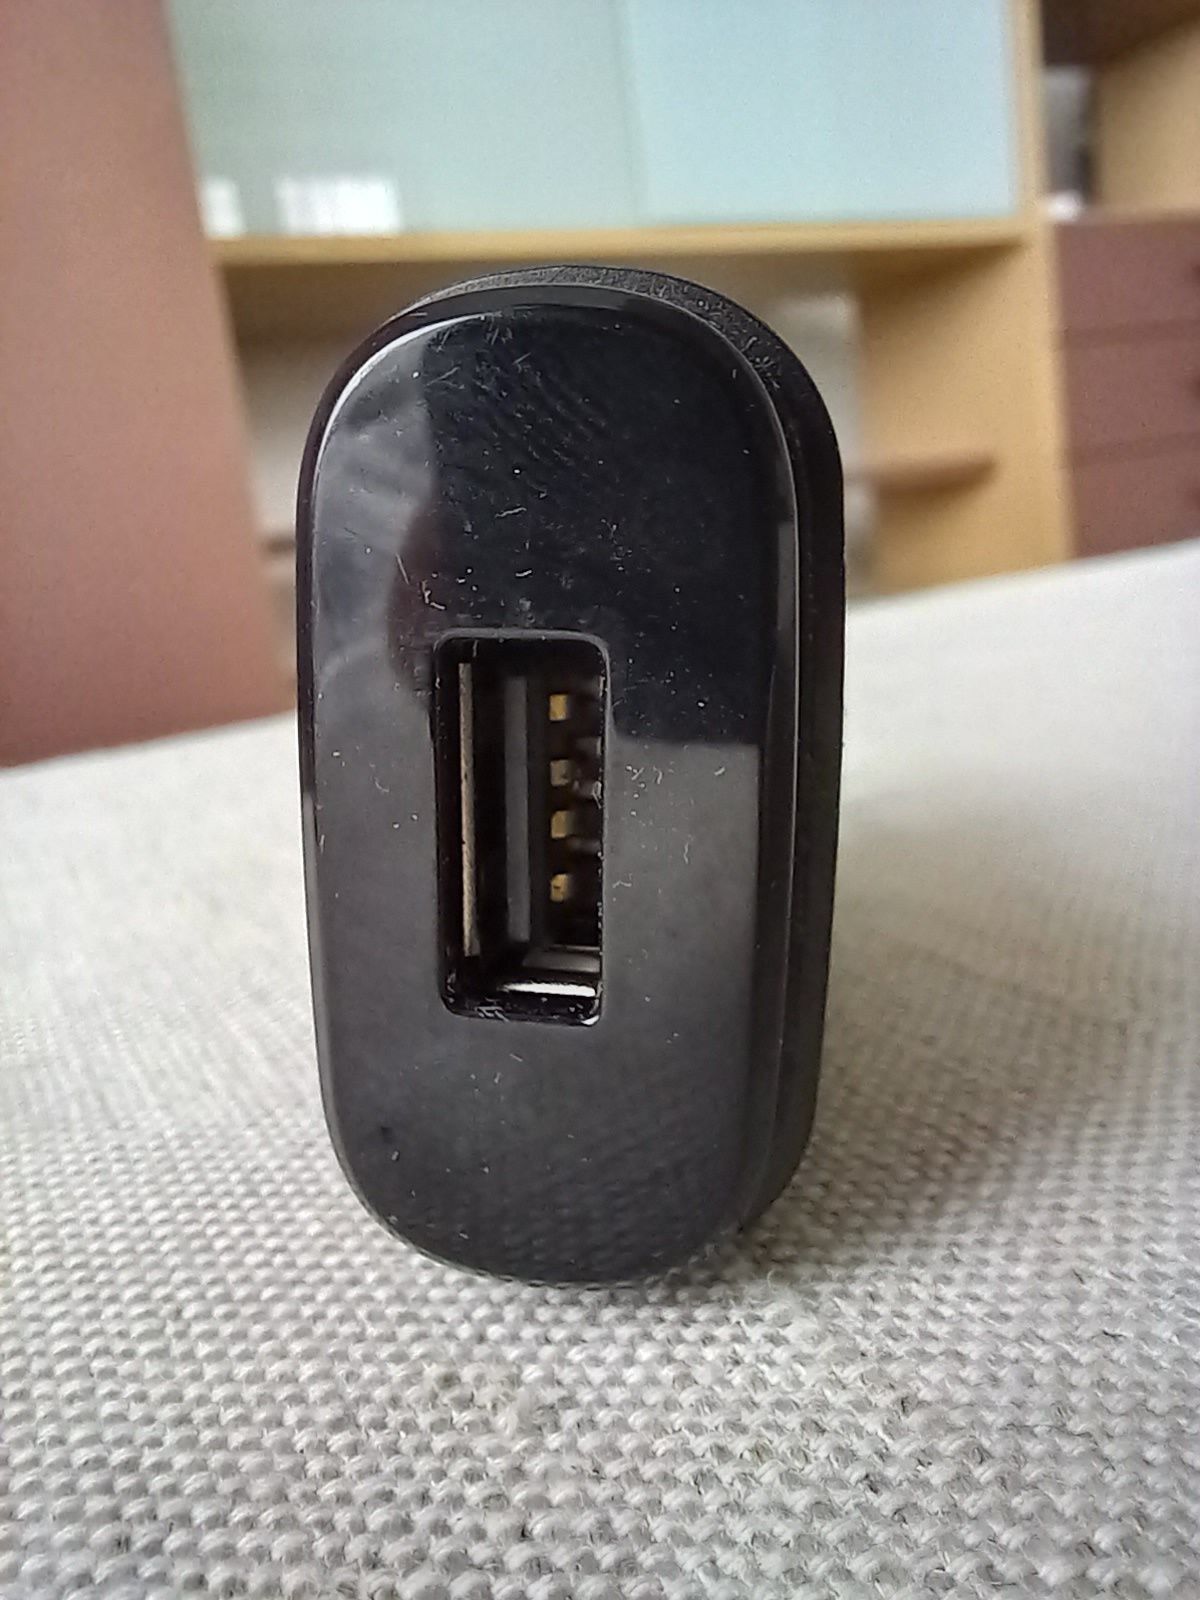 LG zasilacz ładowarka  USB 5V 0,85A